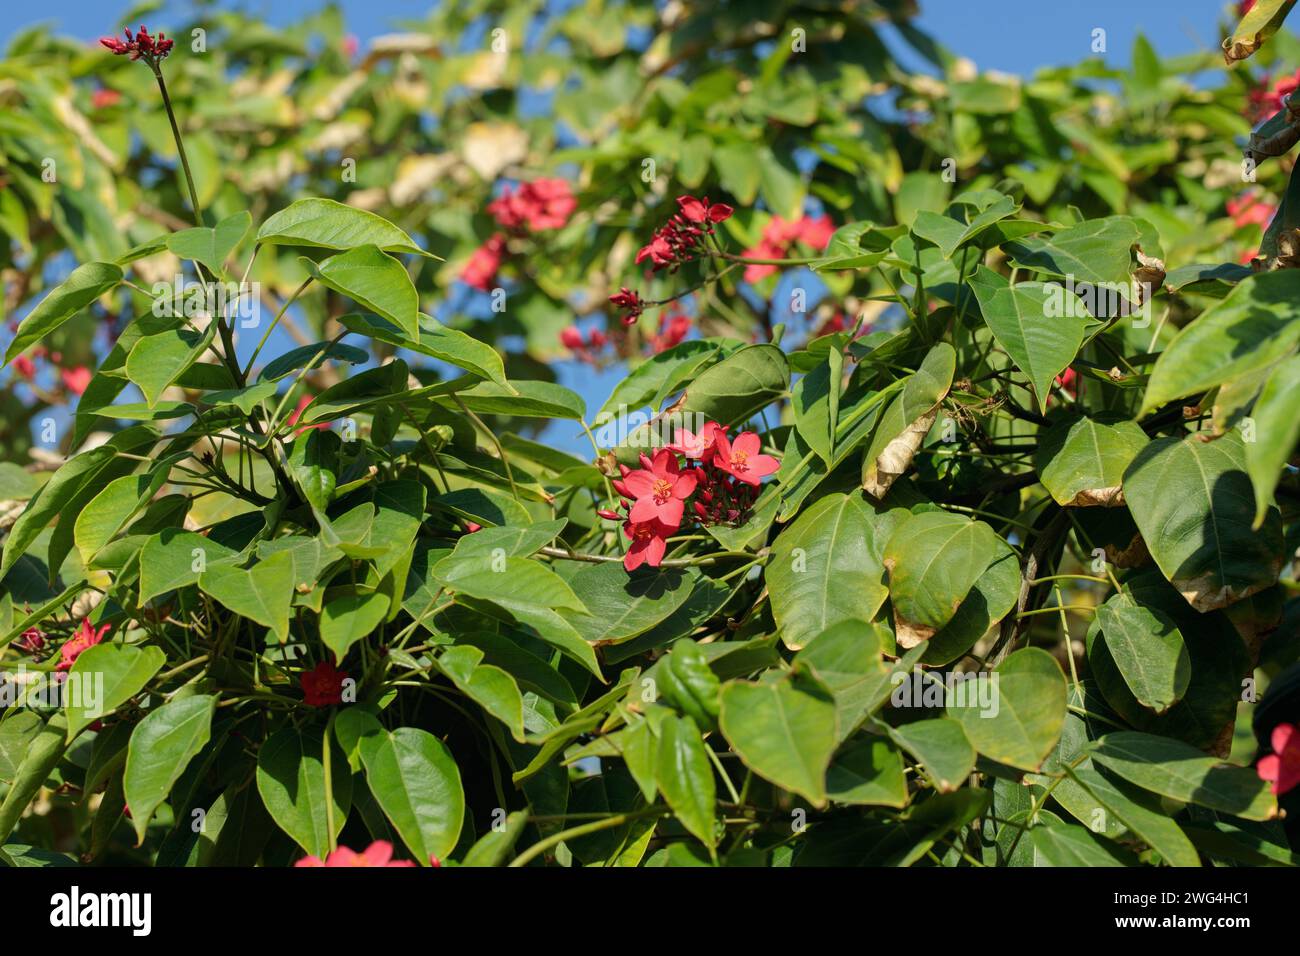 Peregrina bush (Jatropha integerrima). General habit of the plant. Stock Photo